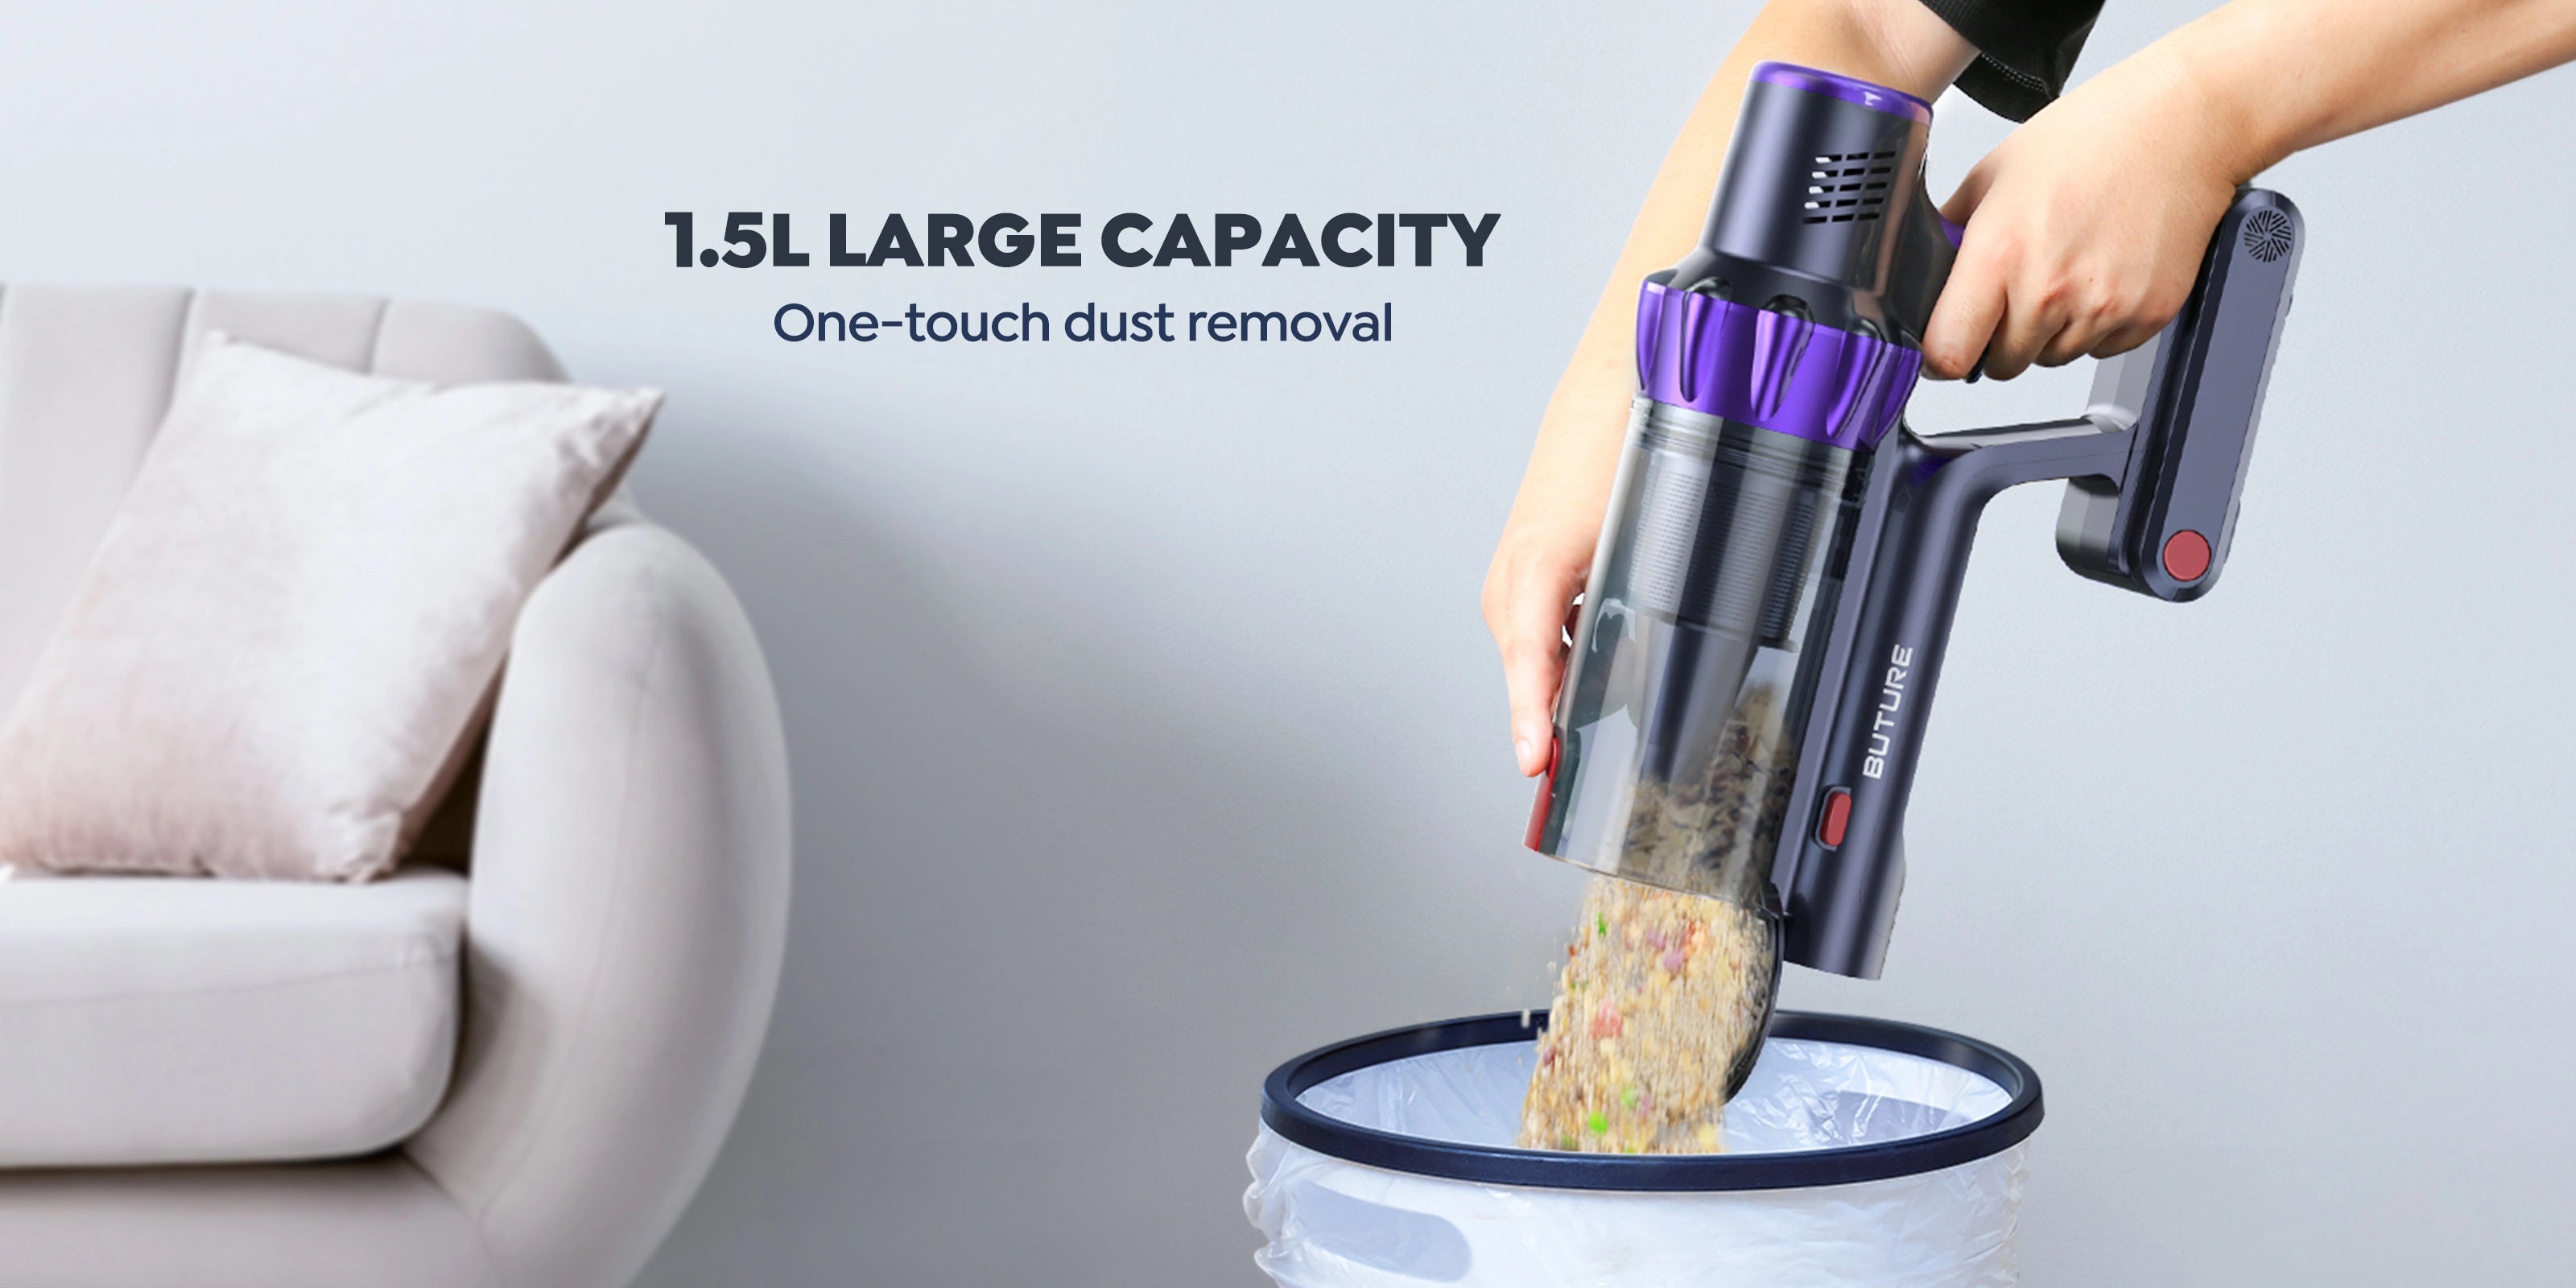 1.5L large dust capacity